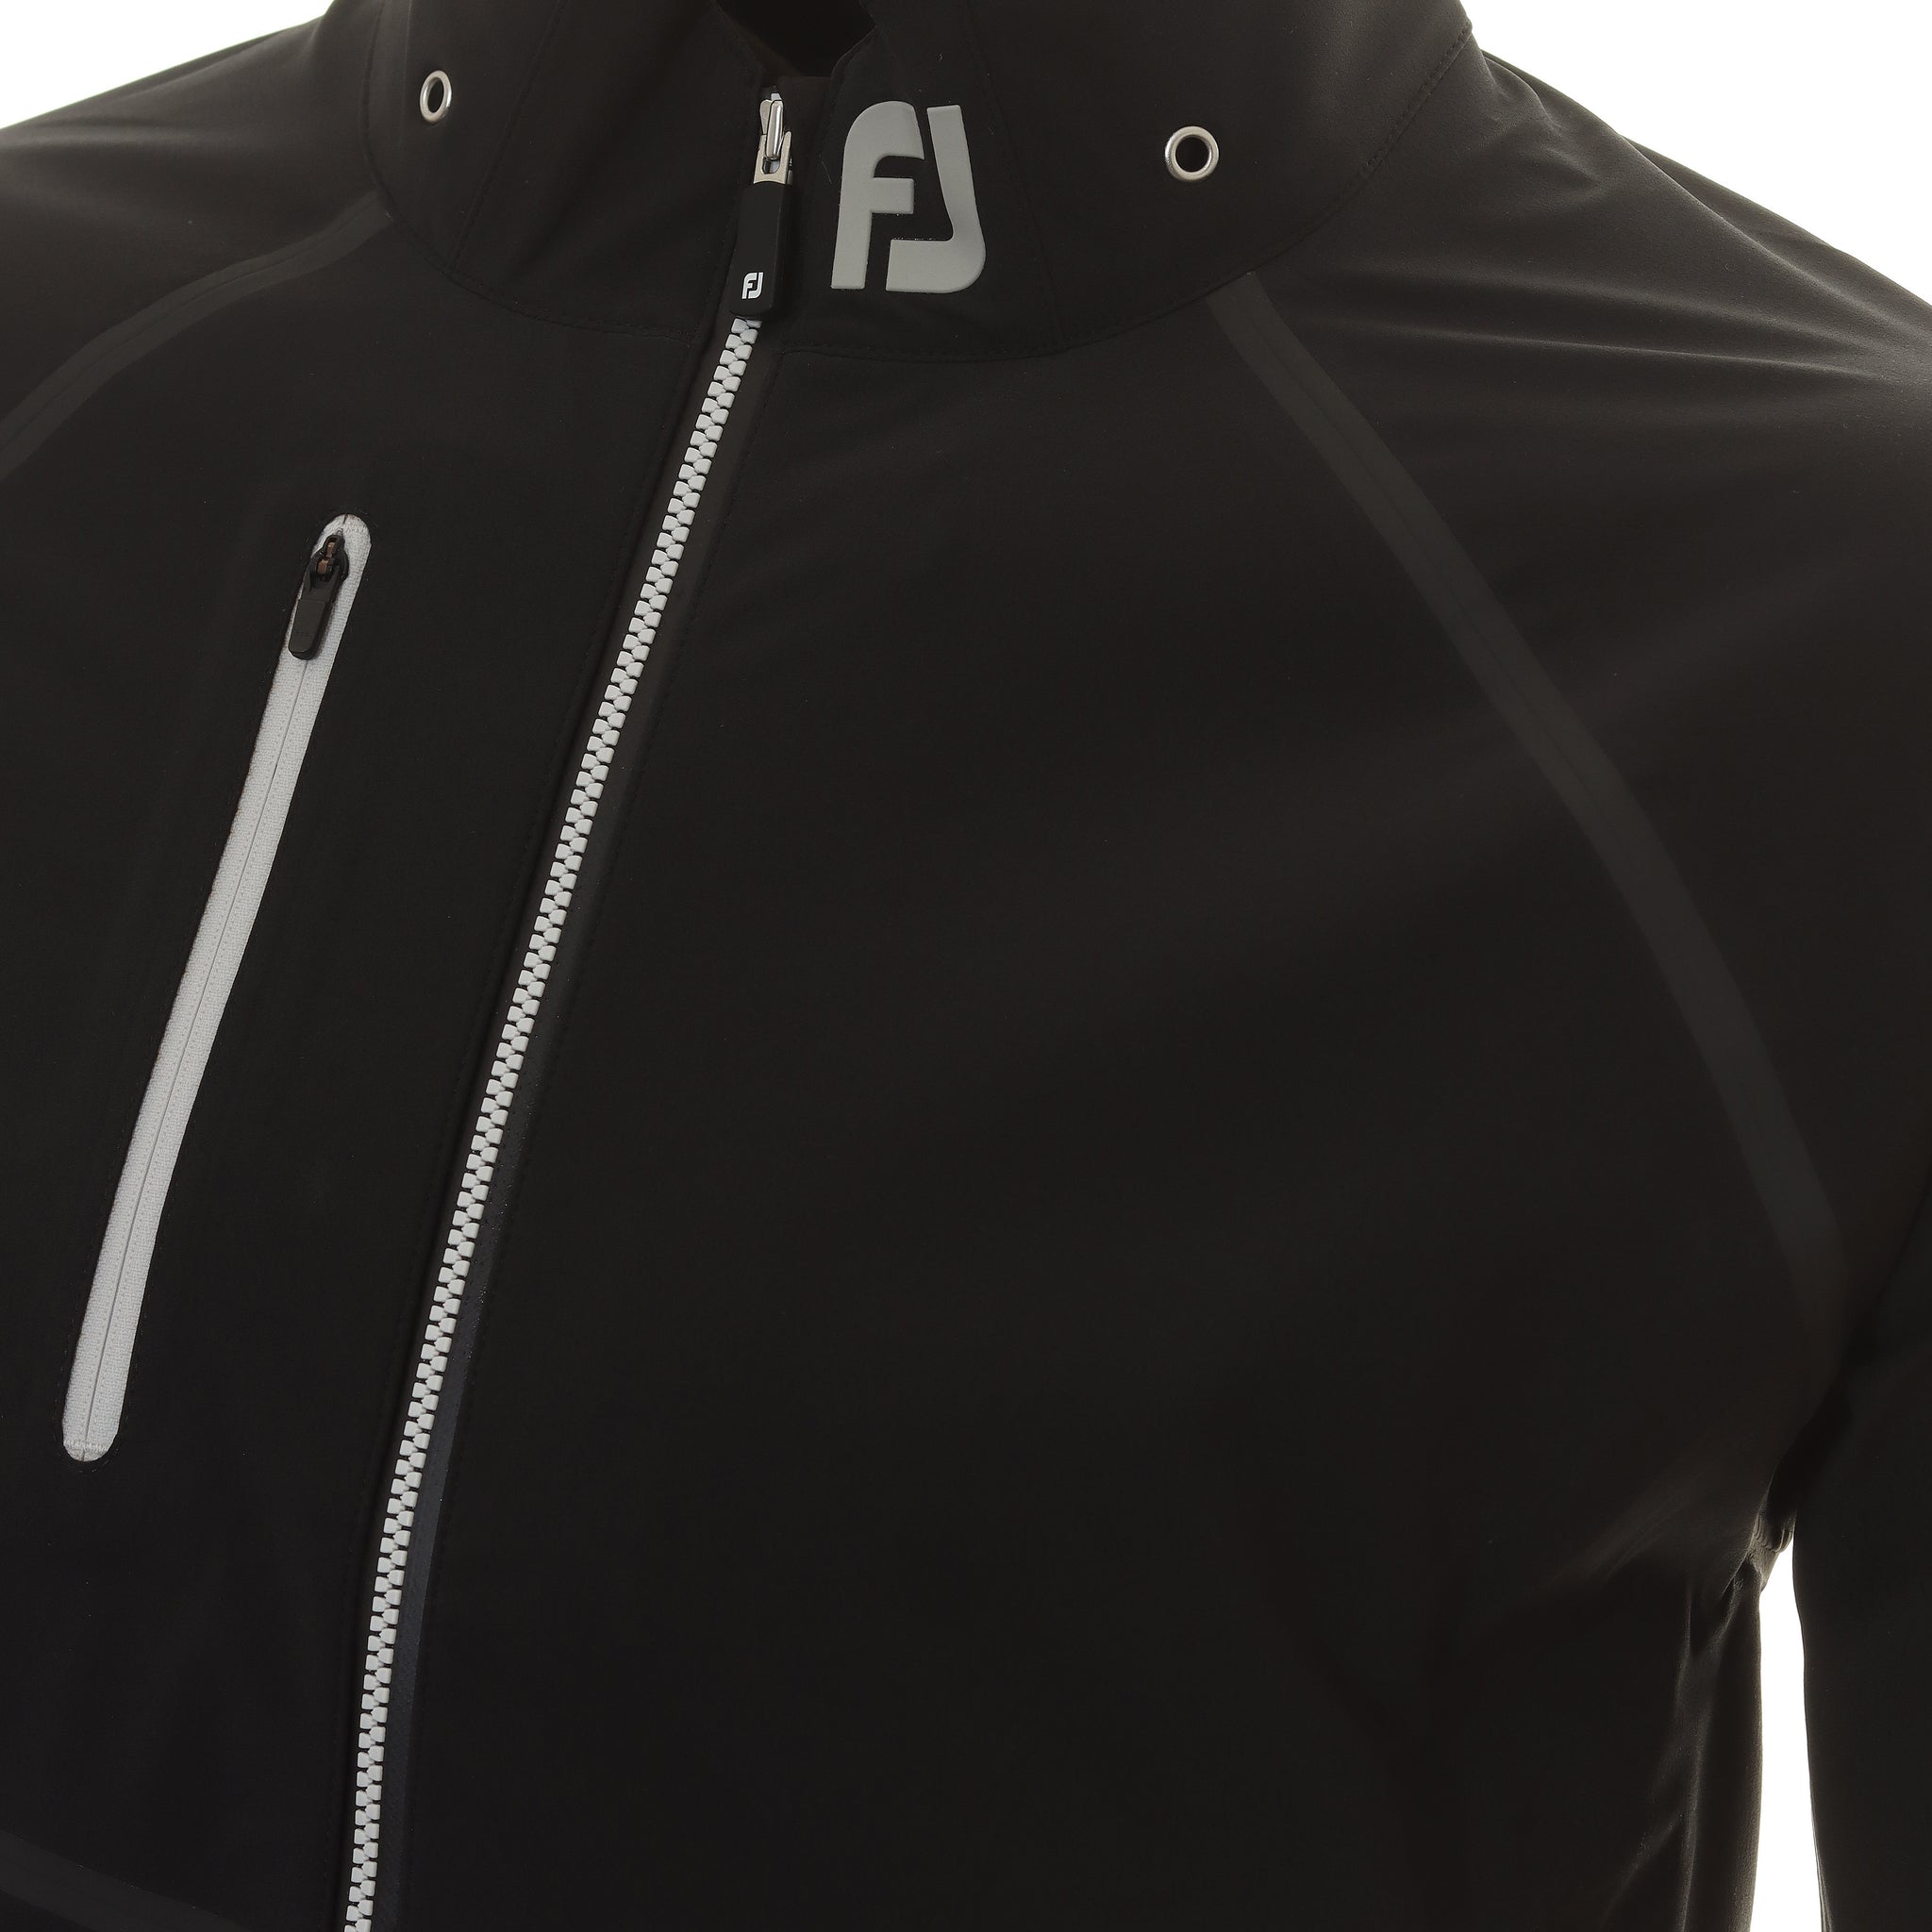 footjoy-golf-hydrotour-jacket-89919-black-silver